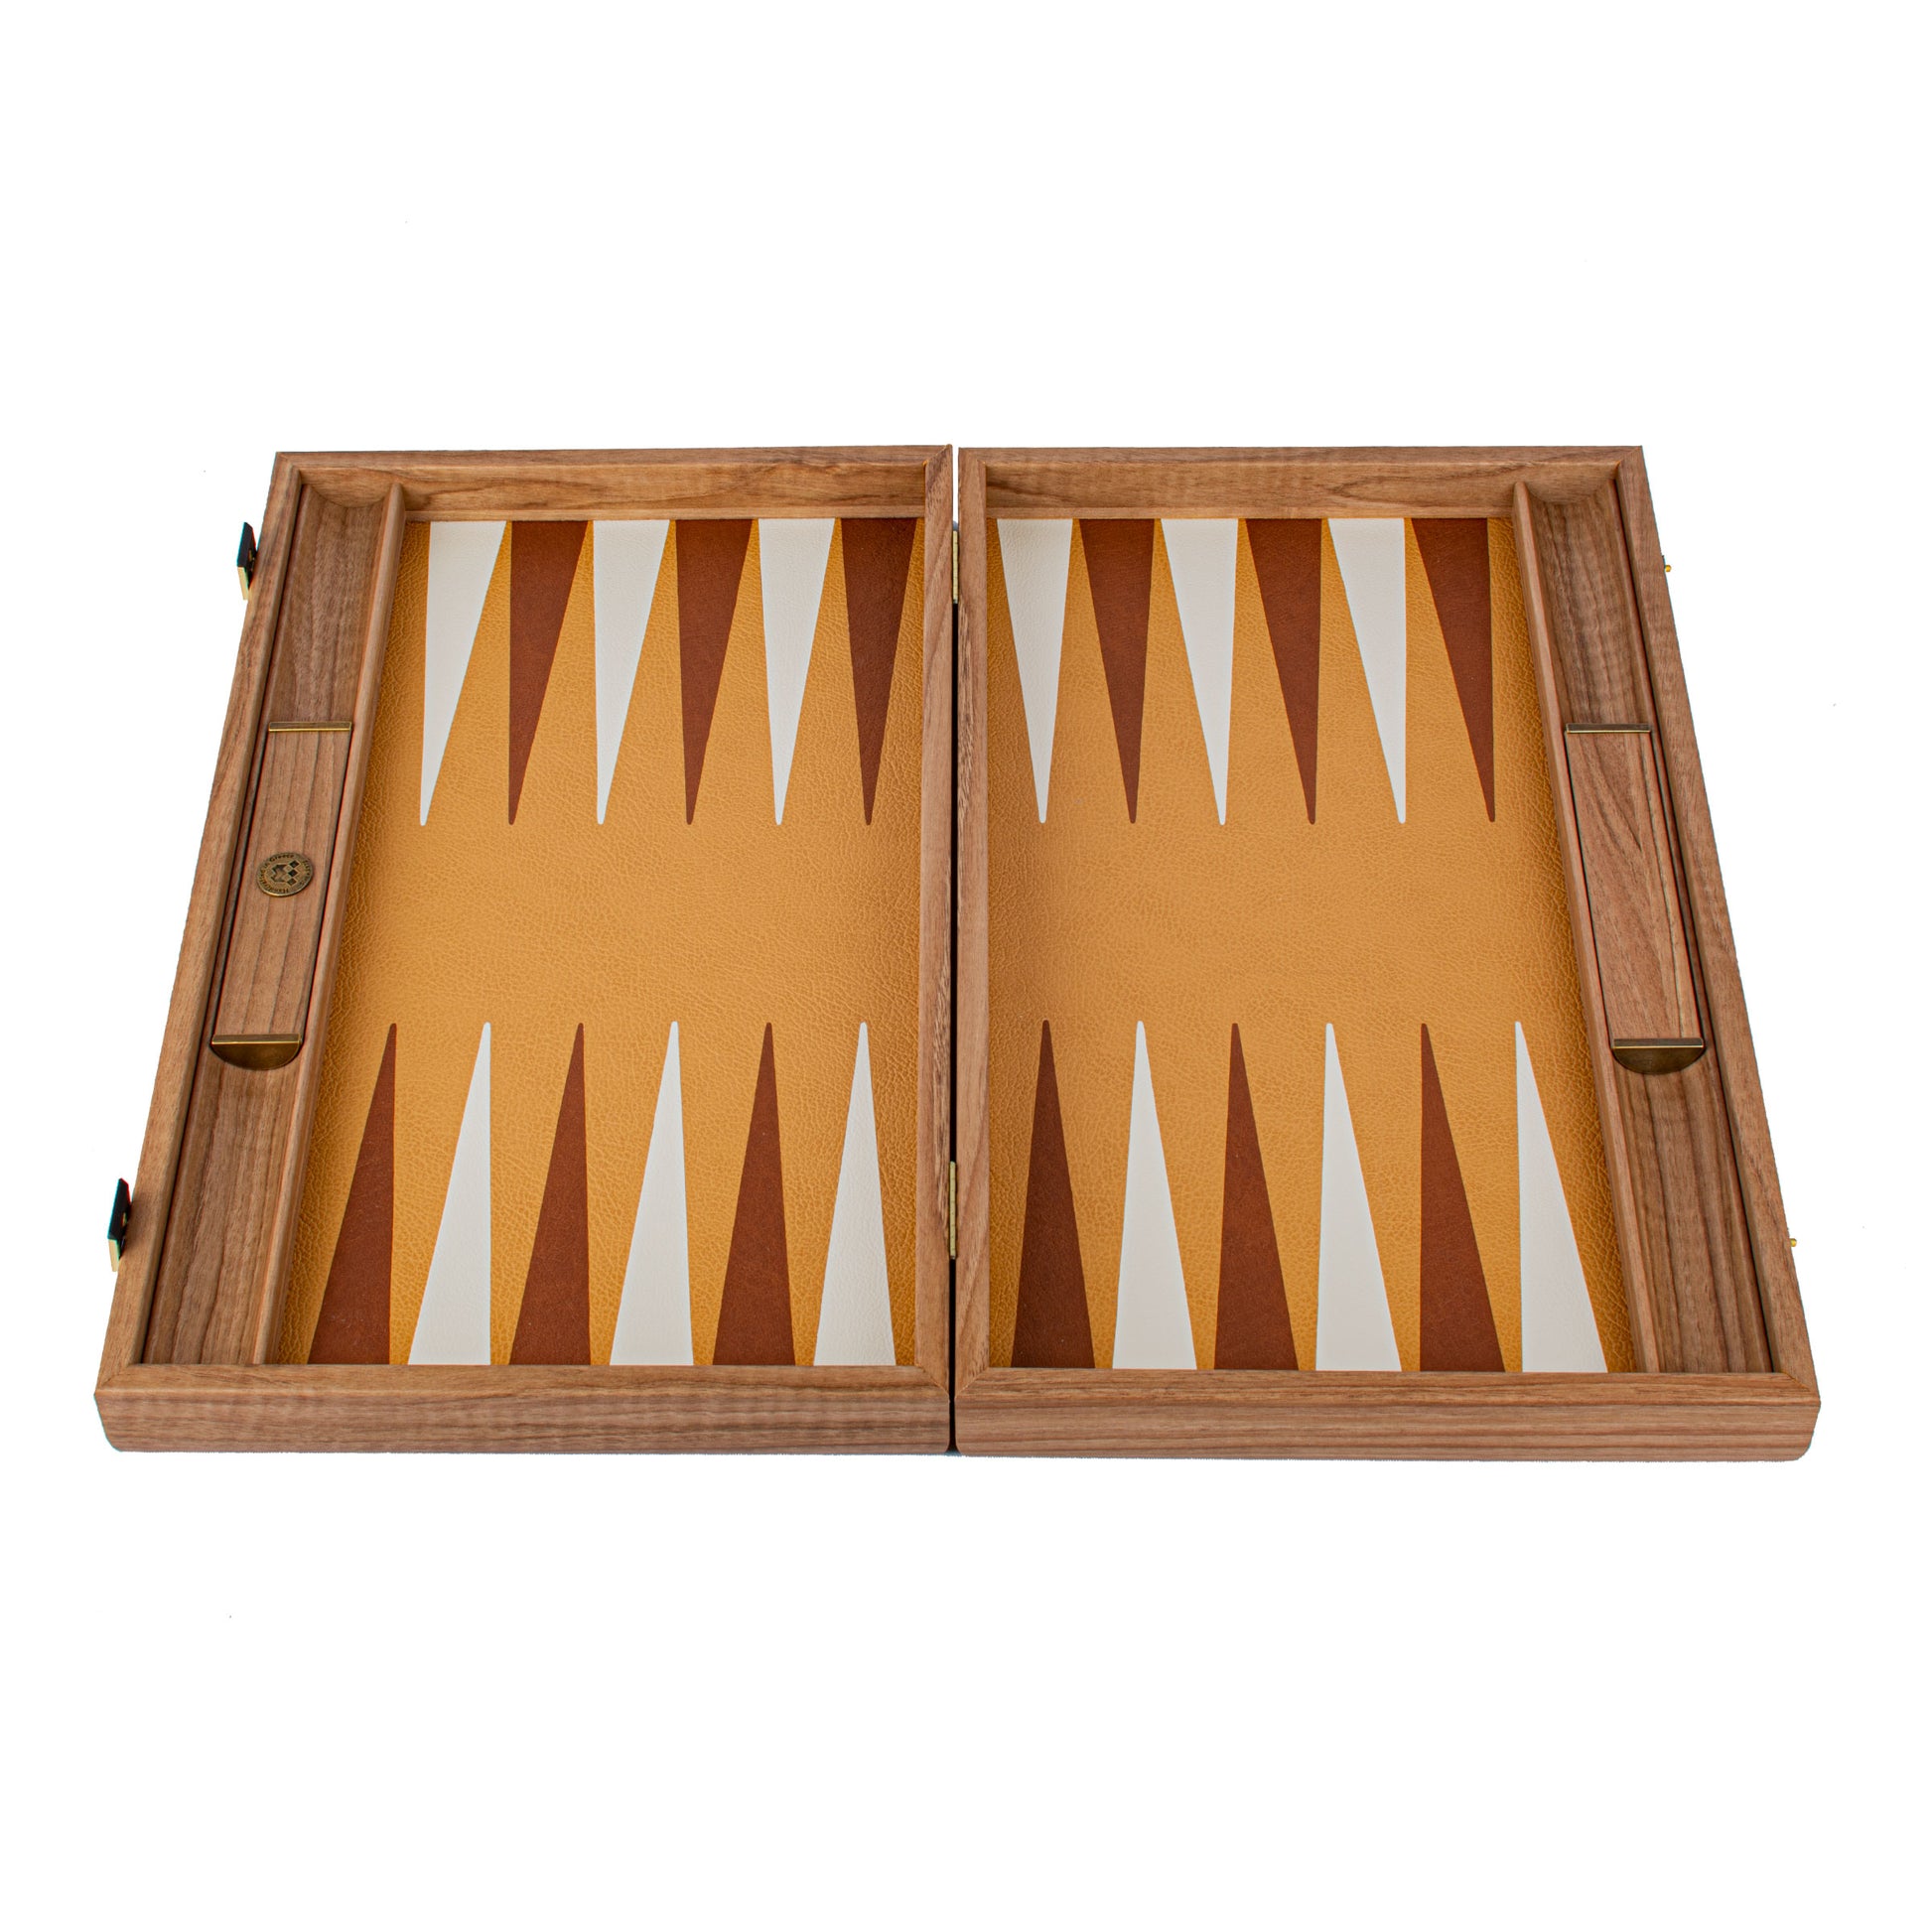 CROCODILE TOTE IN LIGHT BROWN LEATHER Backgammon - Premium Backgammon from MANOPOULOS Chess & Backgammon - Just €490! Shop now at MANOPOULOS Chess & Backgammon